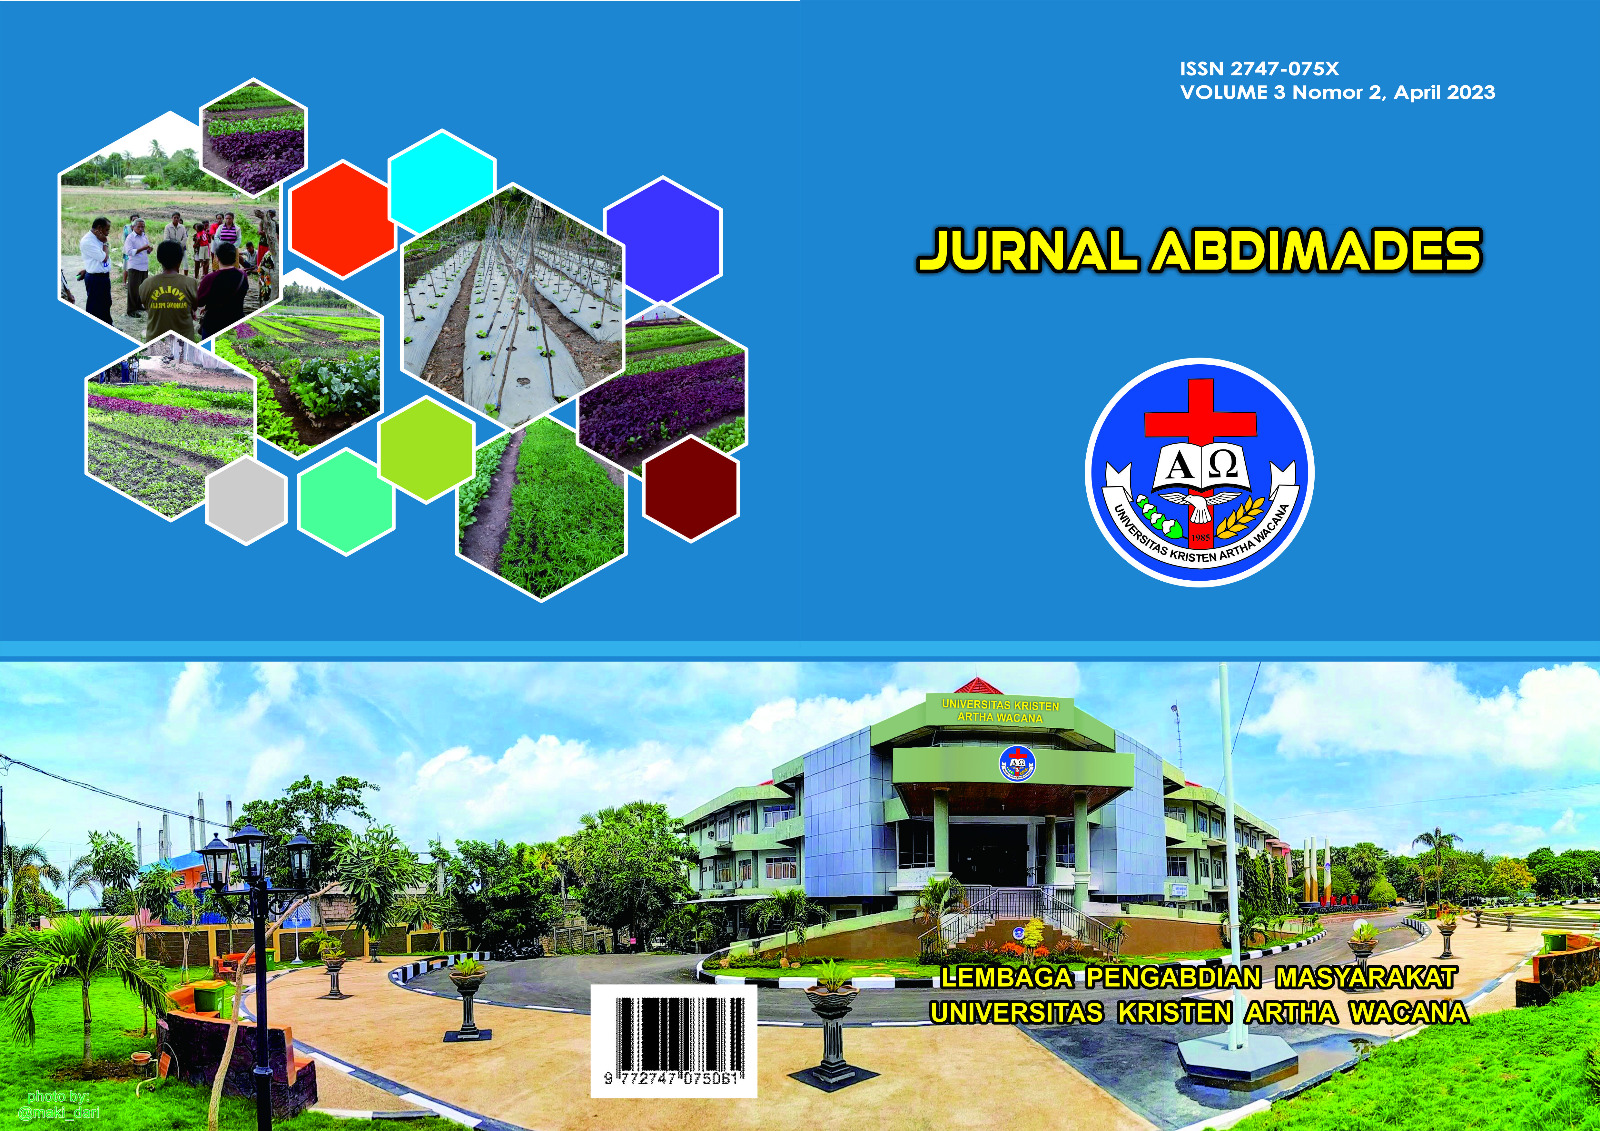 					Lihat Vol 3 No 2 (2023): JURNAL ABDIMADES ISSN 2747-075X
				